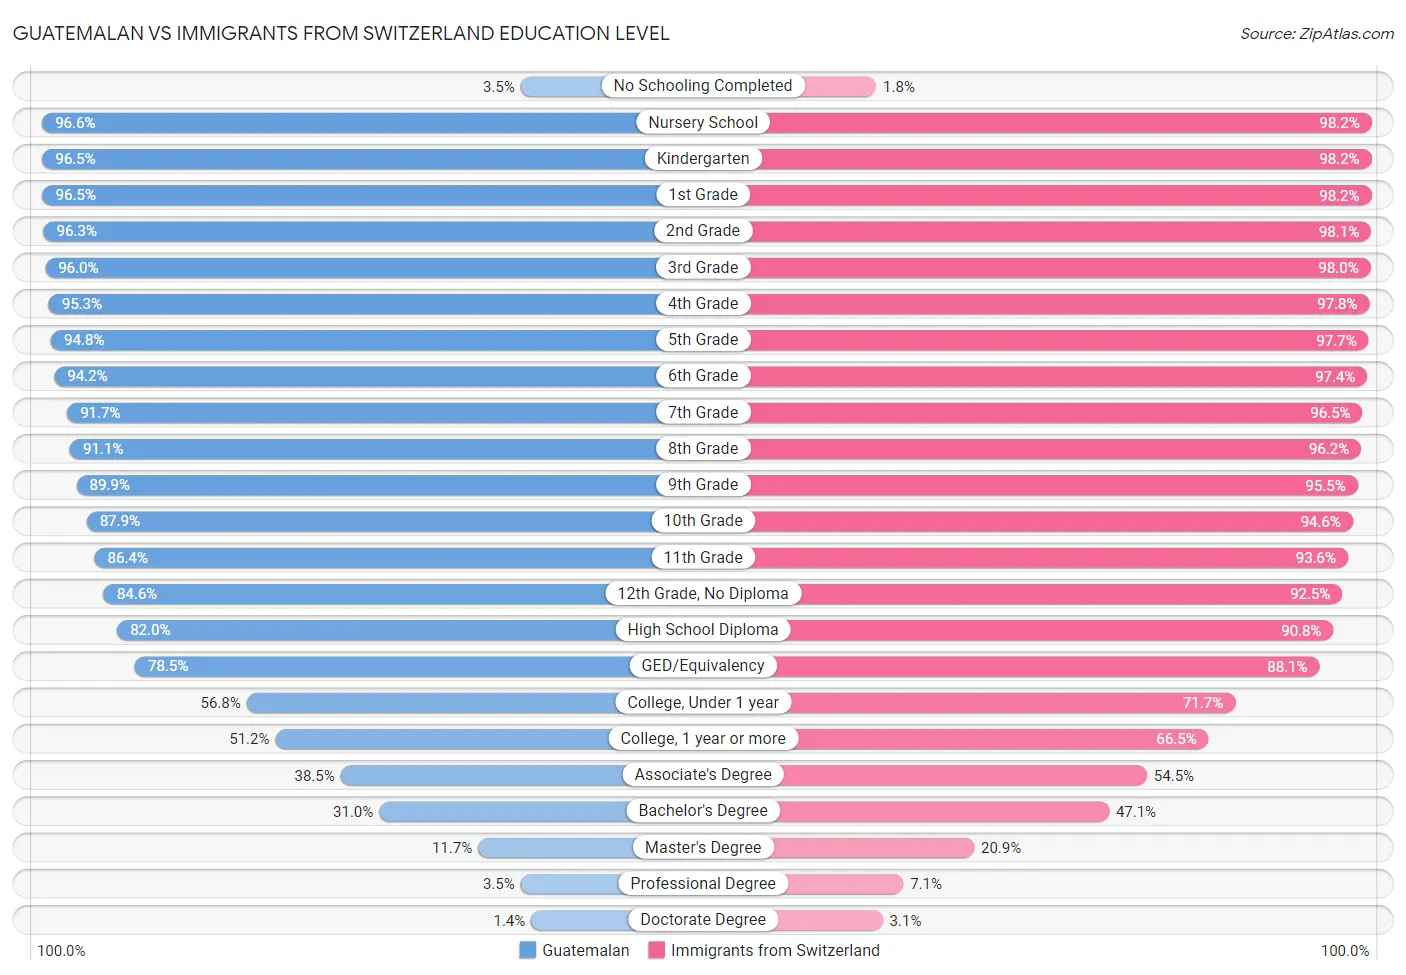 Guatemalan vs Immigrants from Switzerland Education Level